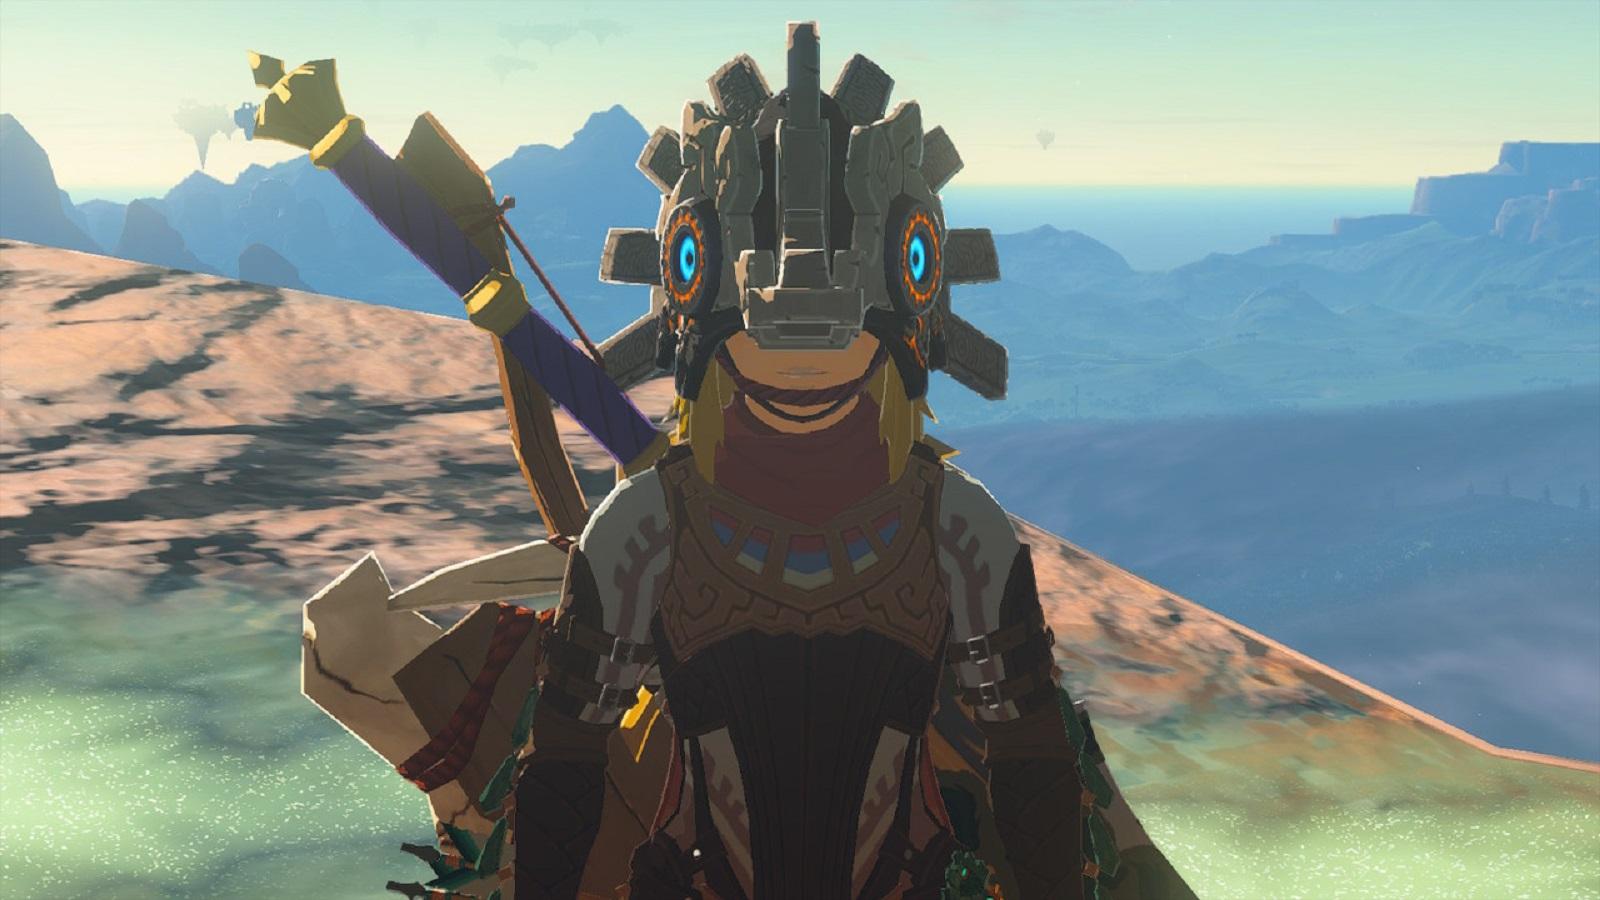 Link wearing the Vah Medoh Divine helm